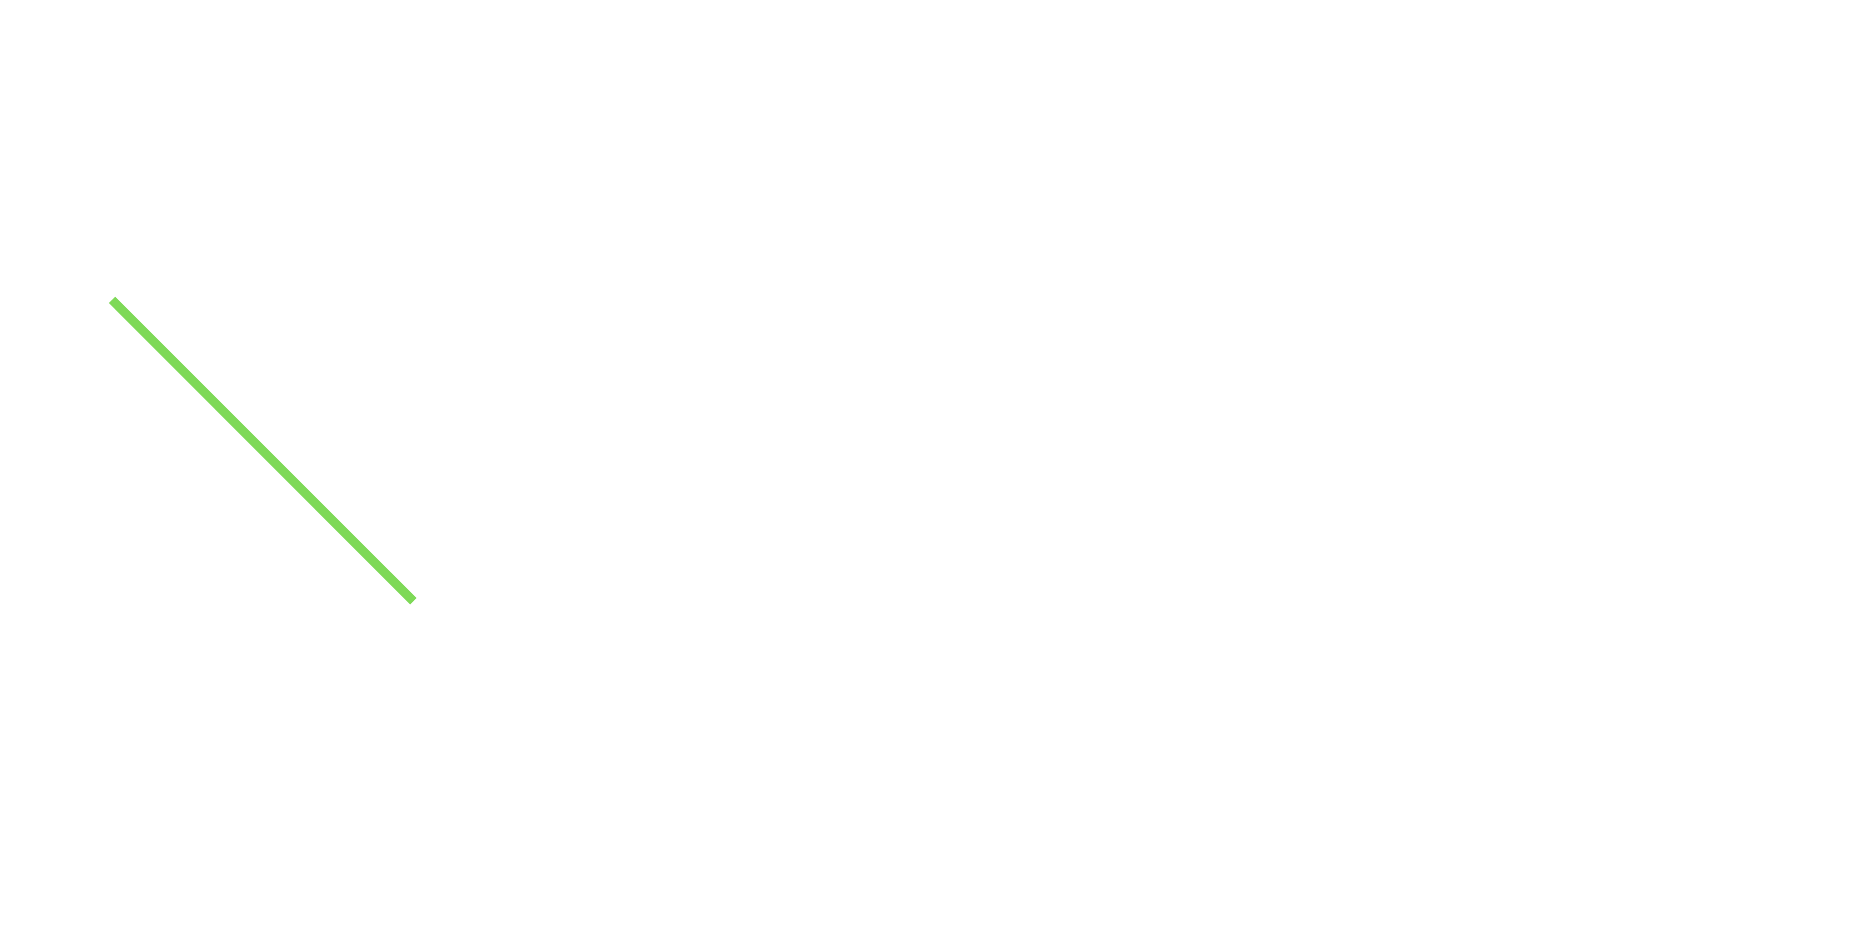 Digital Navigators